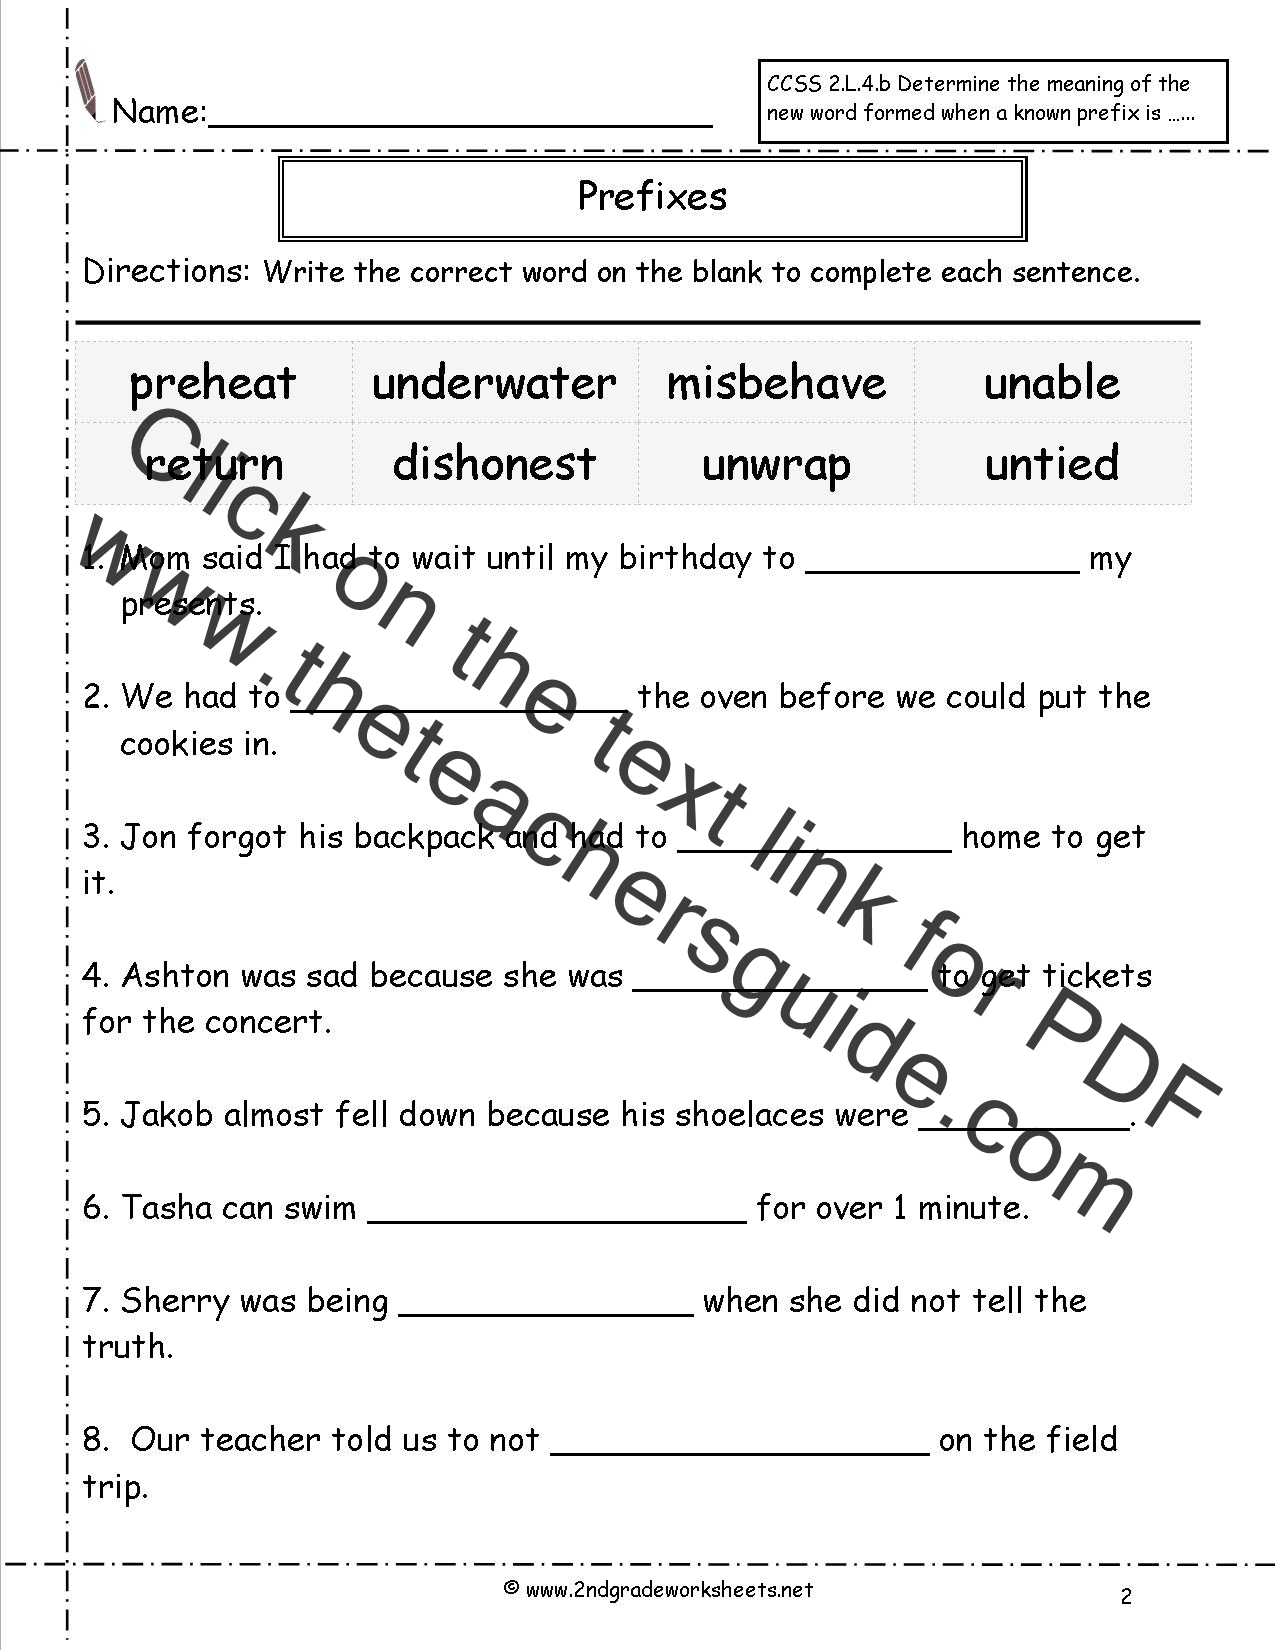 Second Grade Prefixes Worksheets Inside Prefixes And Suffixes Worksheet